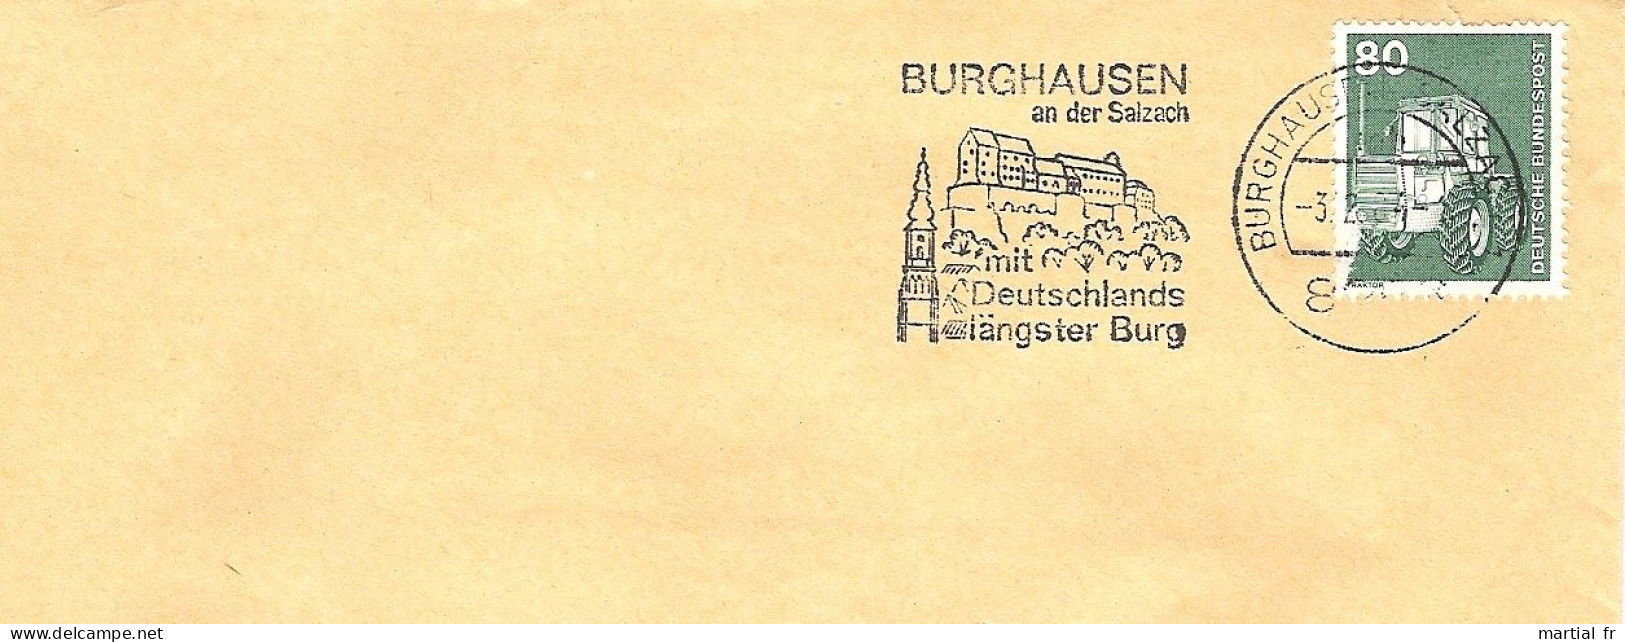 ALLEMAGNE DEUTSCHLAND GERMANY ARCHITECTURE CHATEAU FORT BURG CASTLE SCHLOSS FORTIFICATION Burghausen 8263 SALZACH - Châteaux